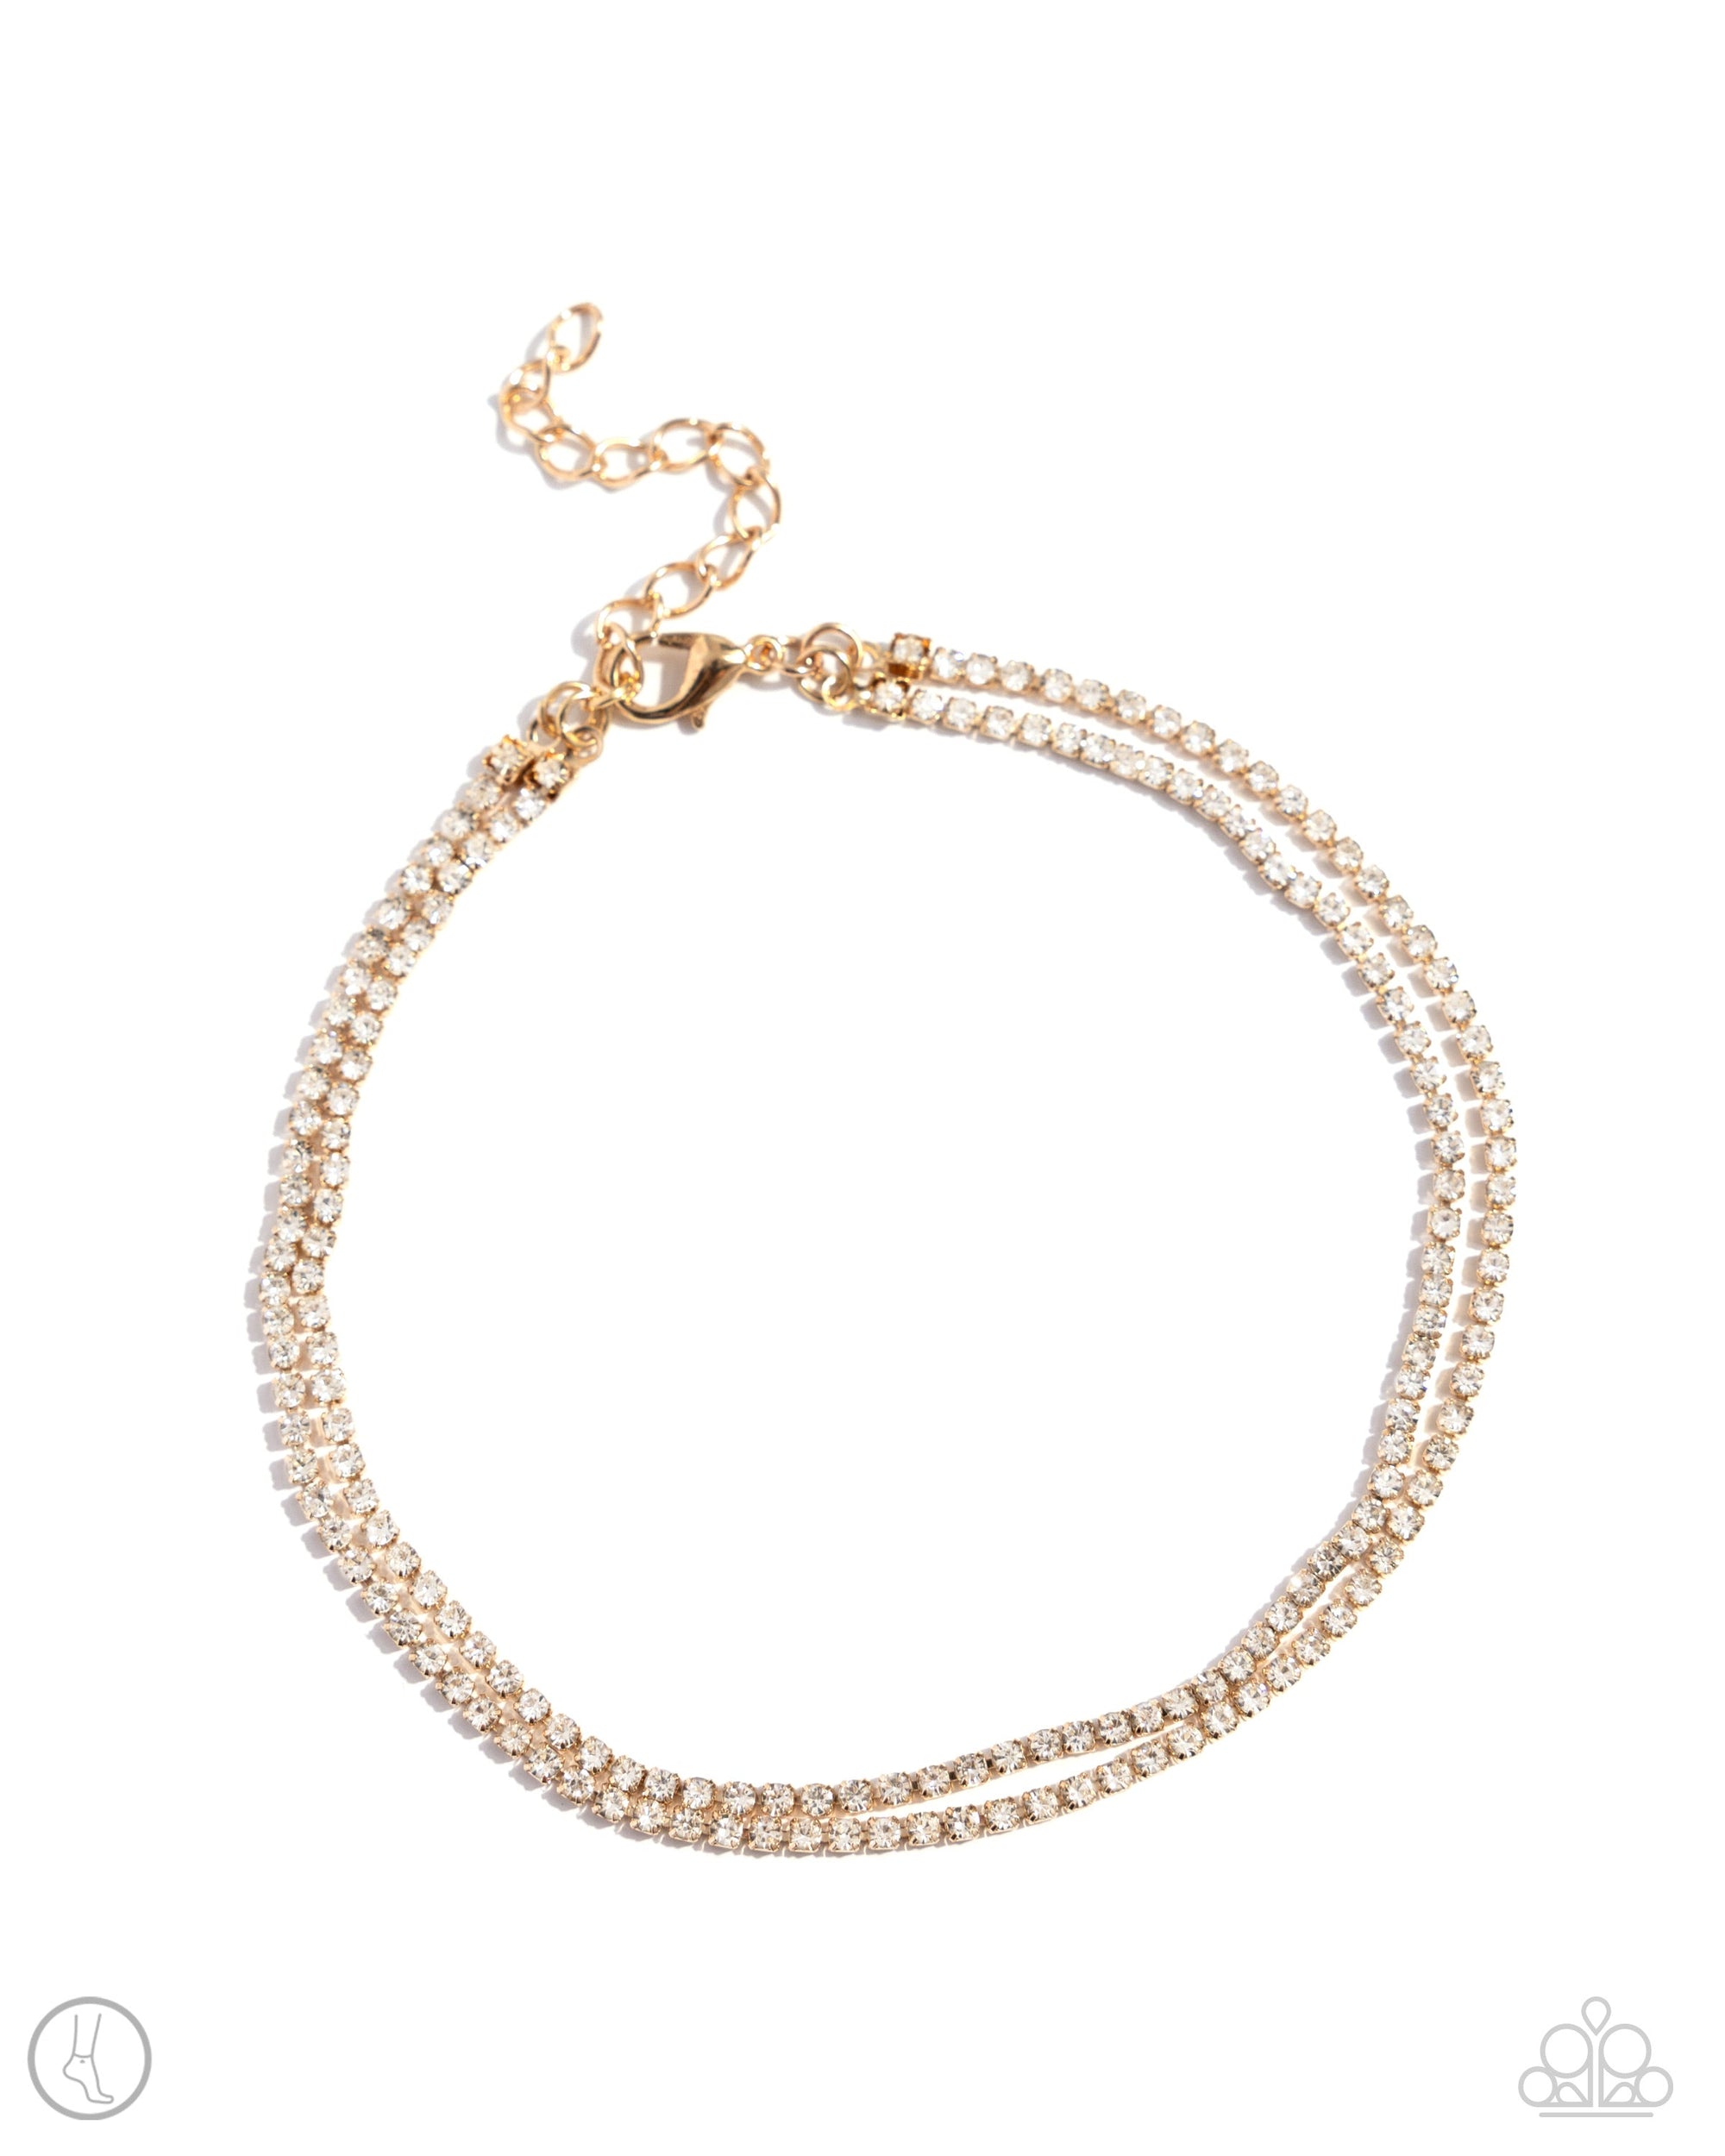 Dainty Declaration Gold & White Rhinestone Anklet - Paparazzi Accessories- lightbox - CarasShop.com - $5 Jewelry by Cara Jewels